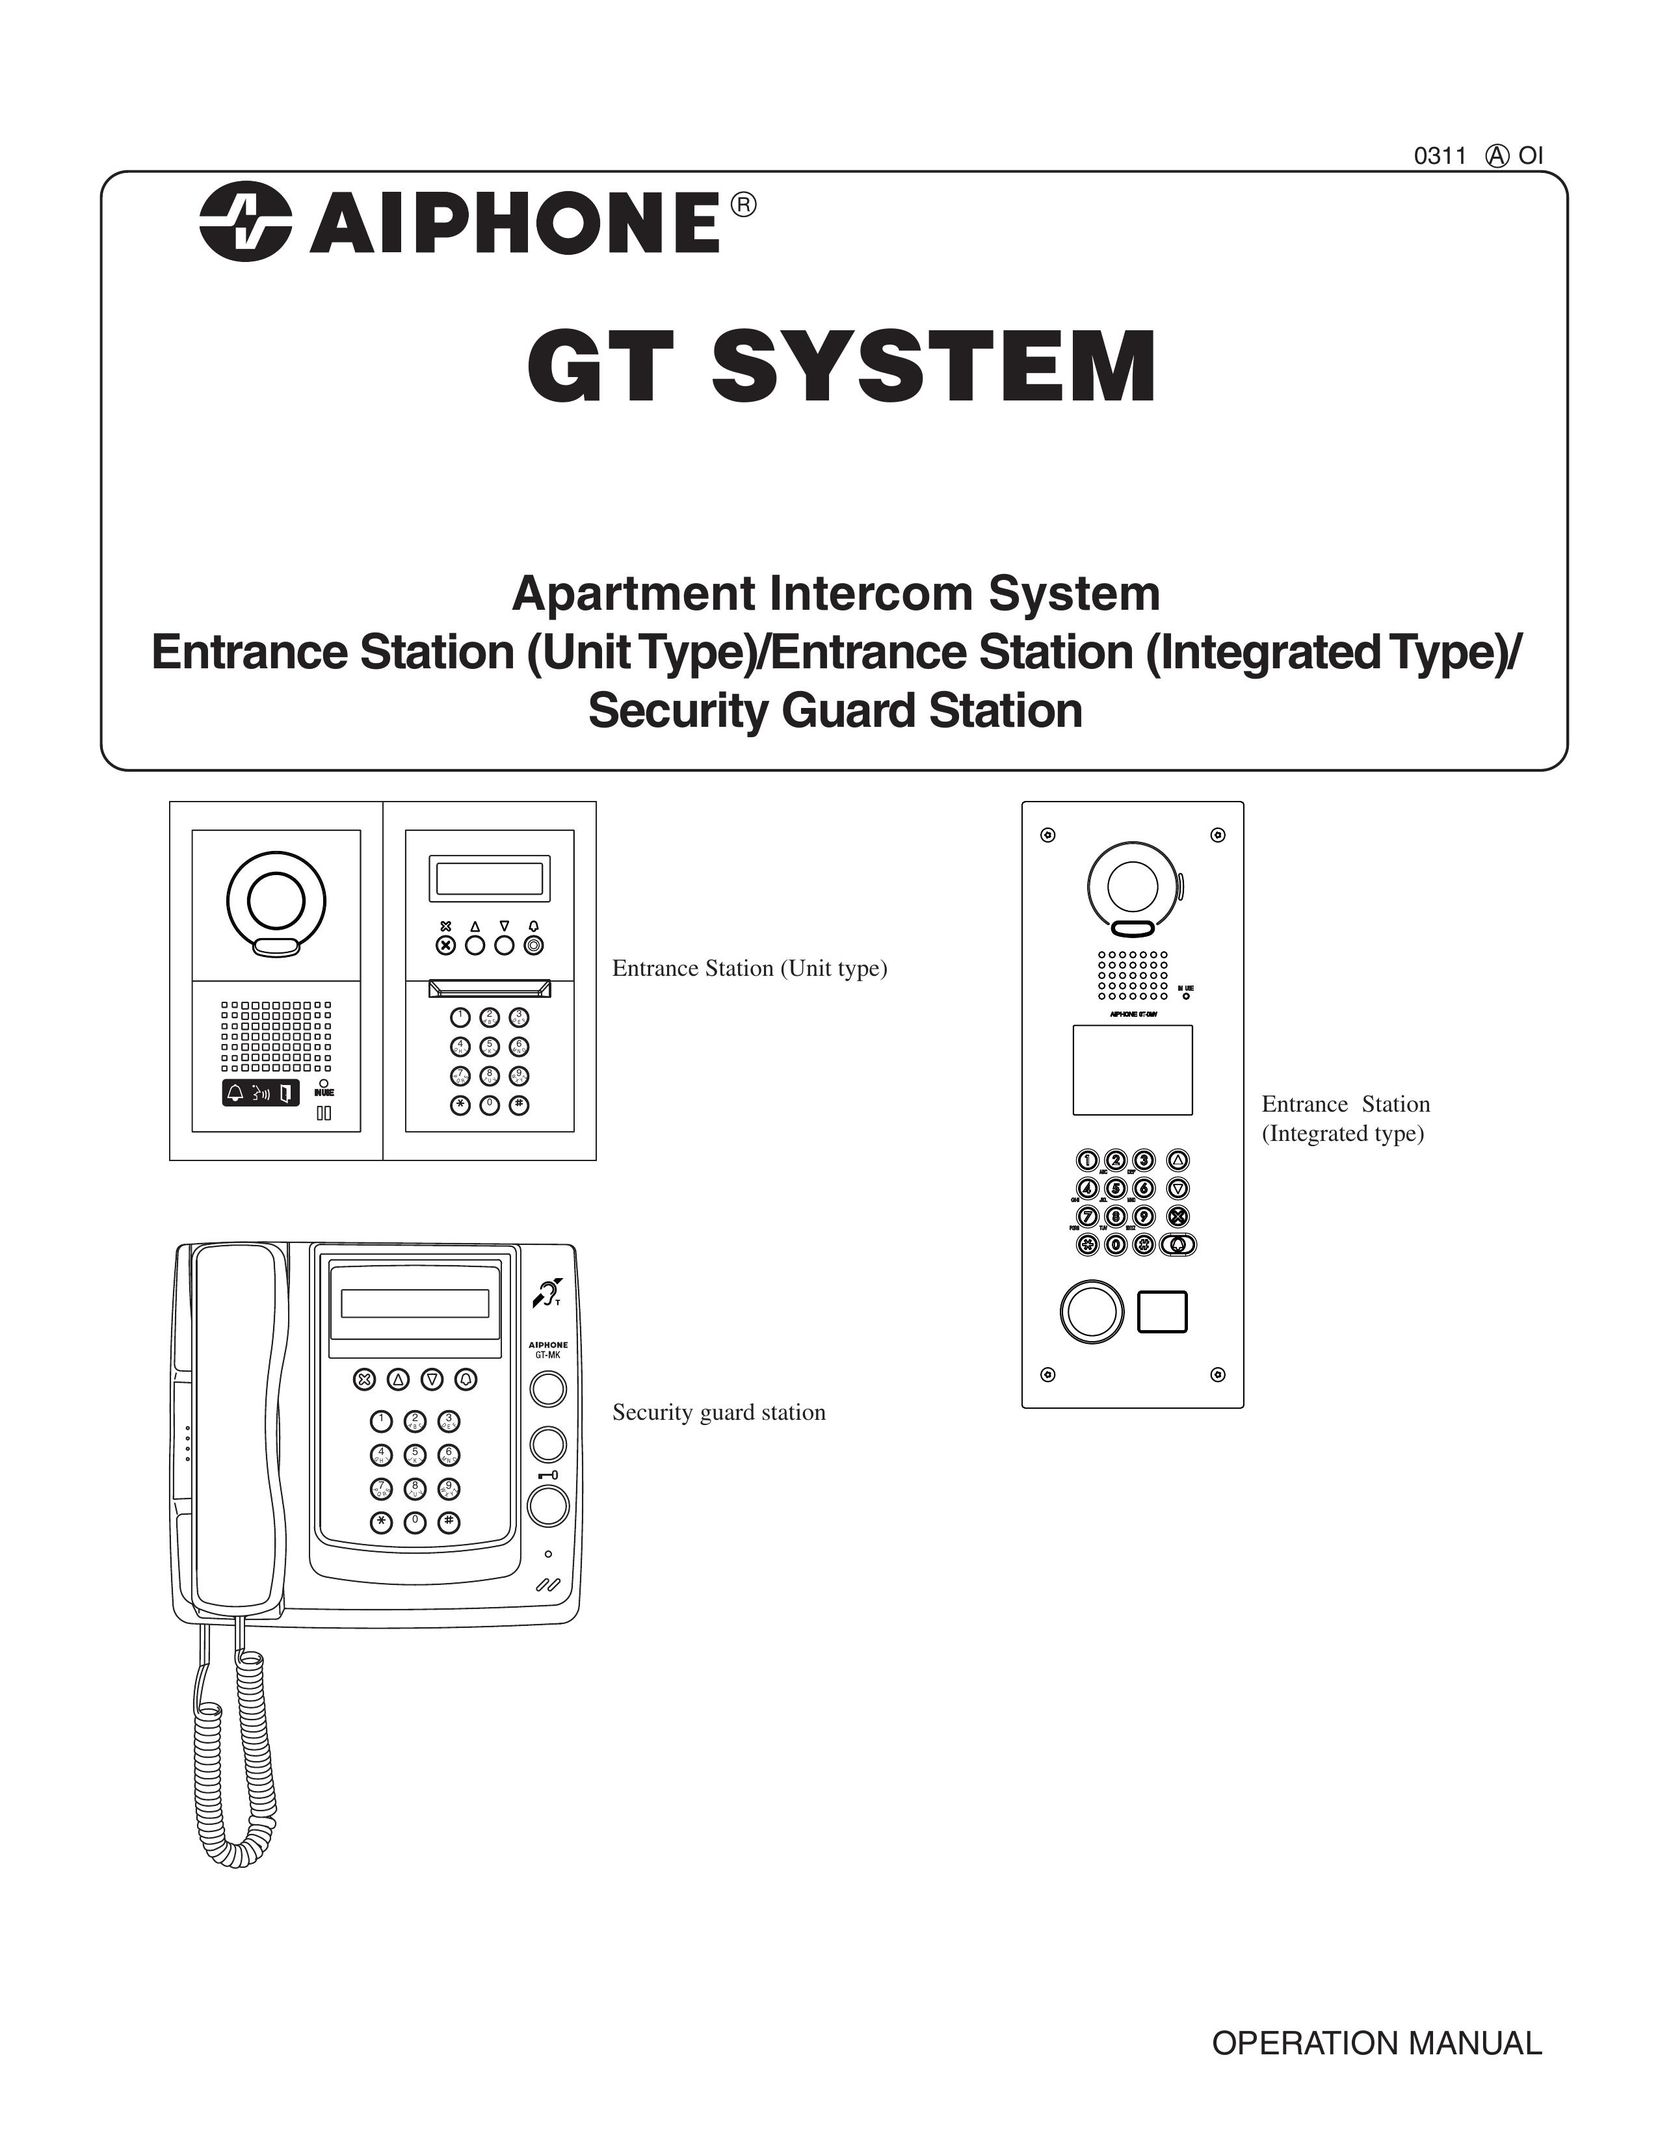 Aiphone 0311 A OI Intercom System User Manual